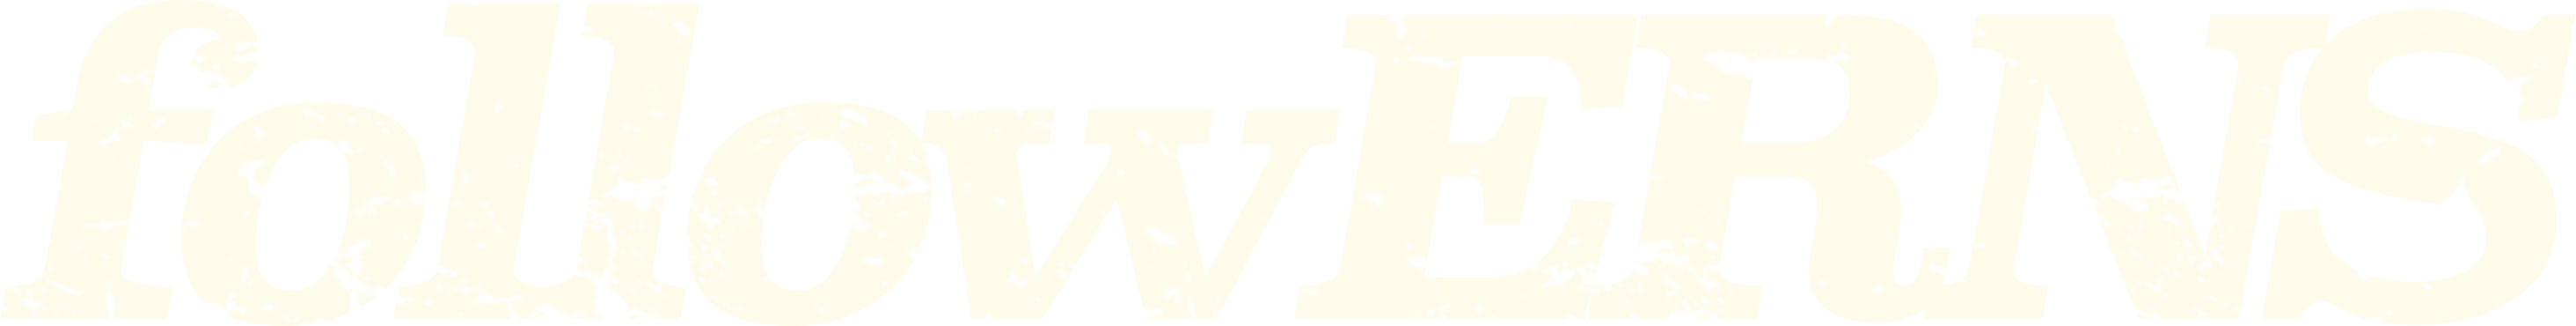 ERNEST [community logo]